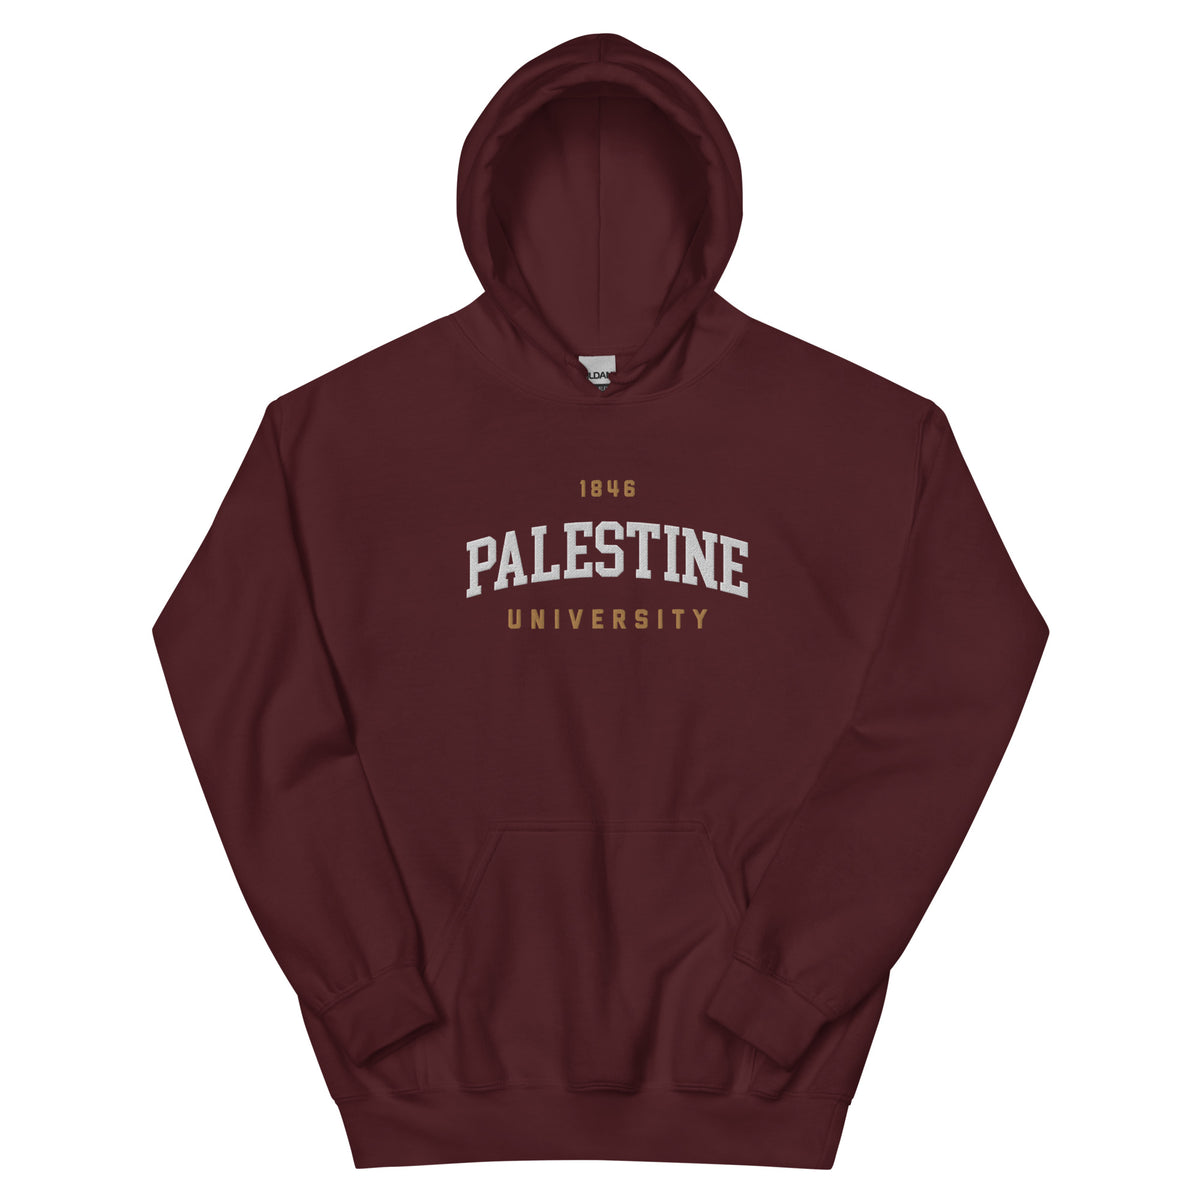 Palestine University 1846 hoodie in maroon by Dar Collective